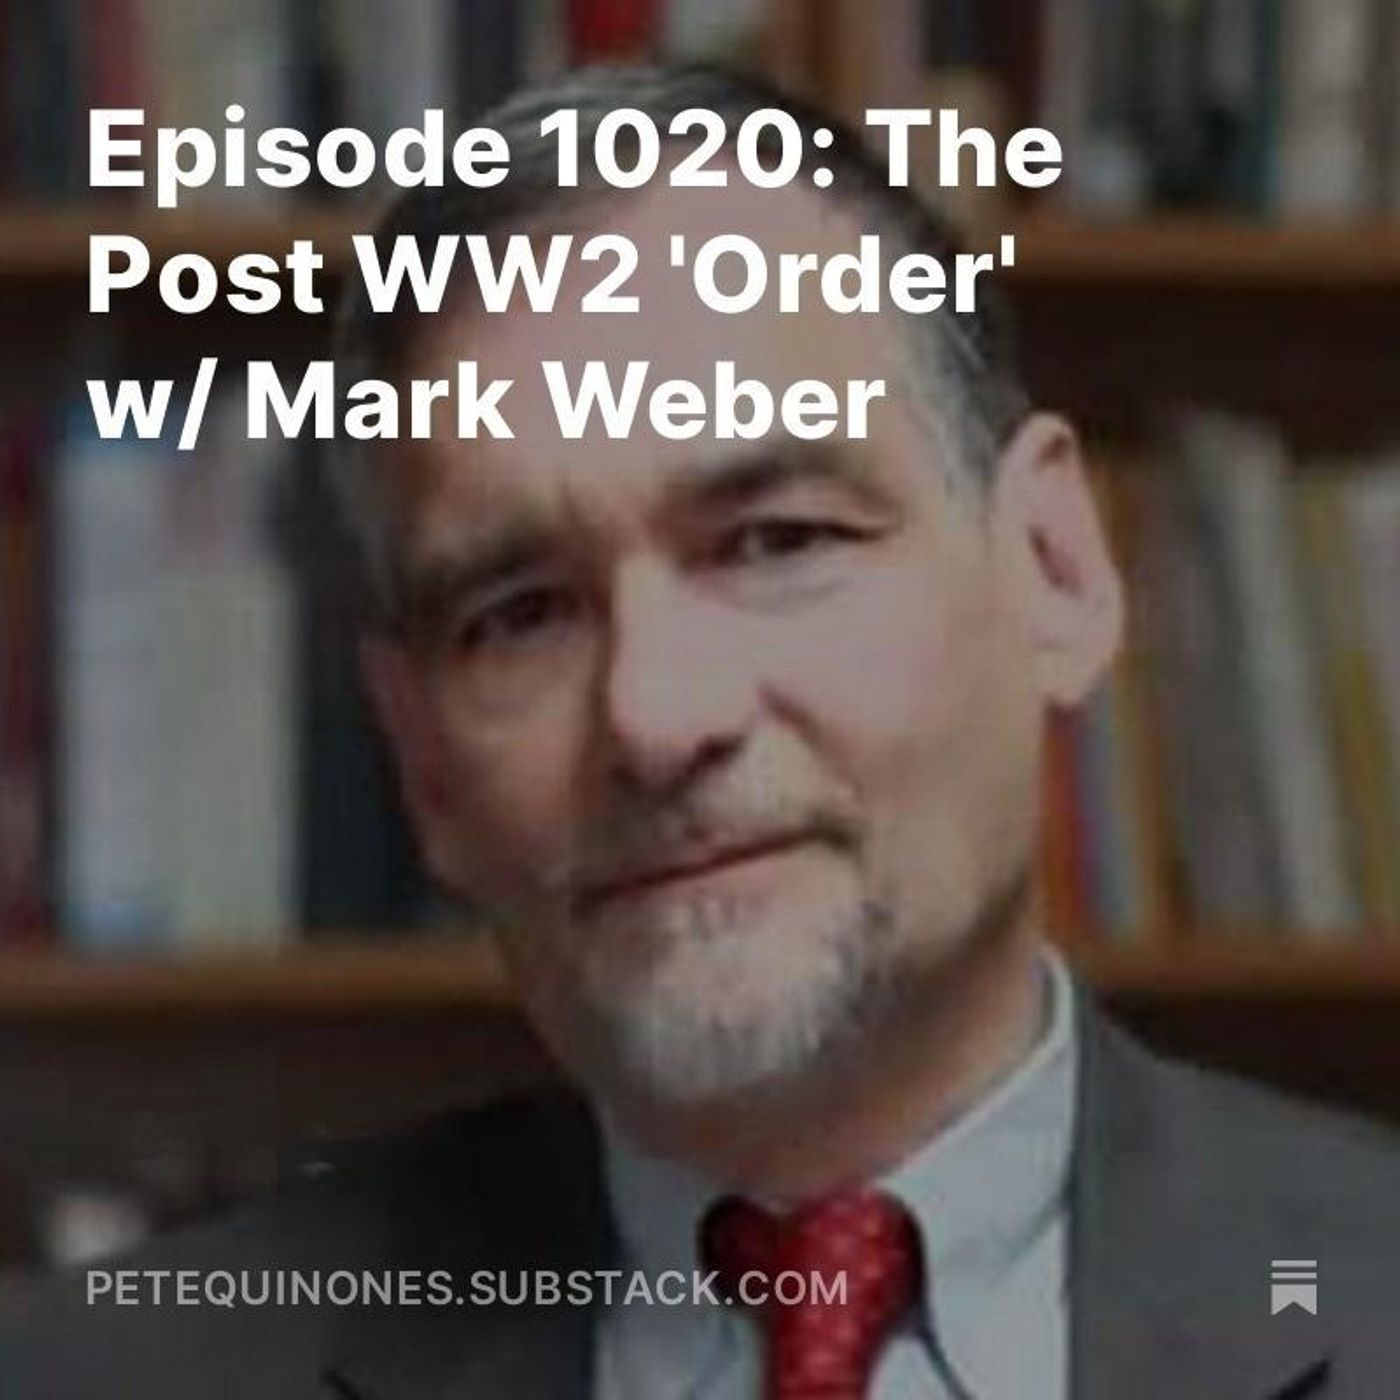 EPISODE 1020: THE POST WW2 ’ORDER’ W/ MARK WEBER